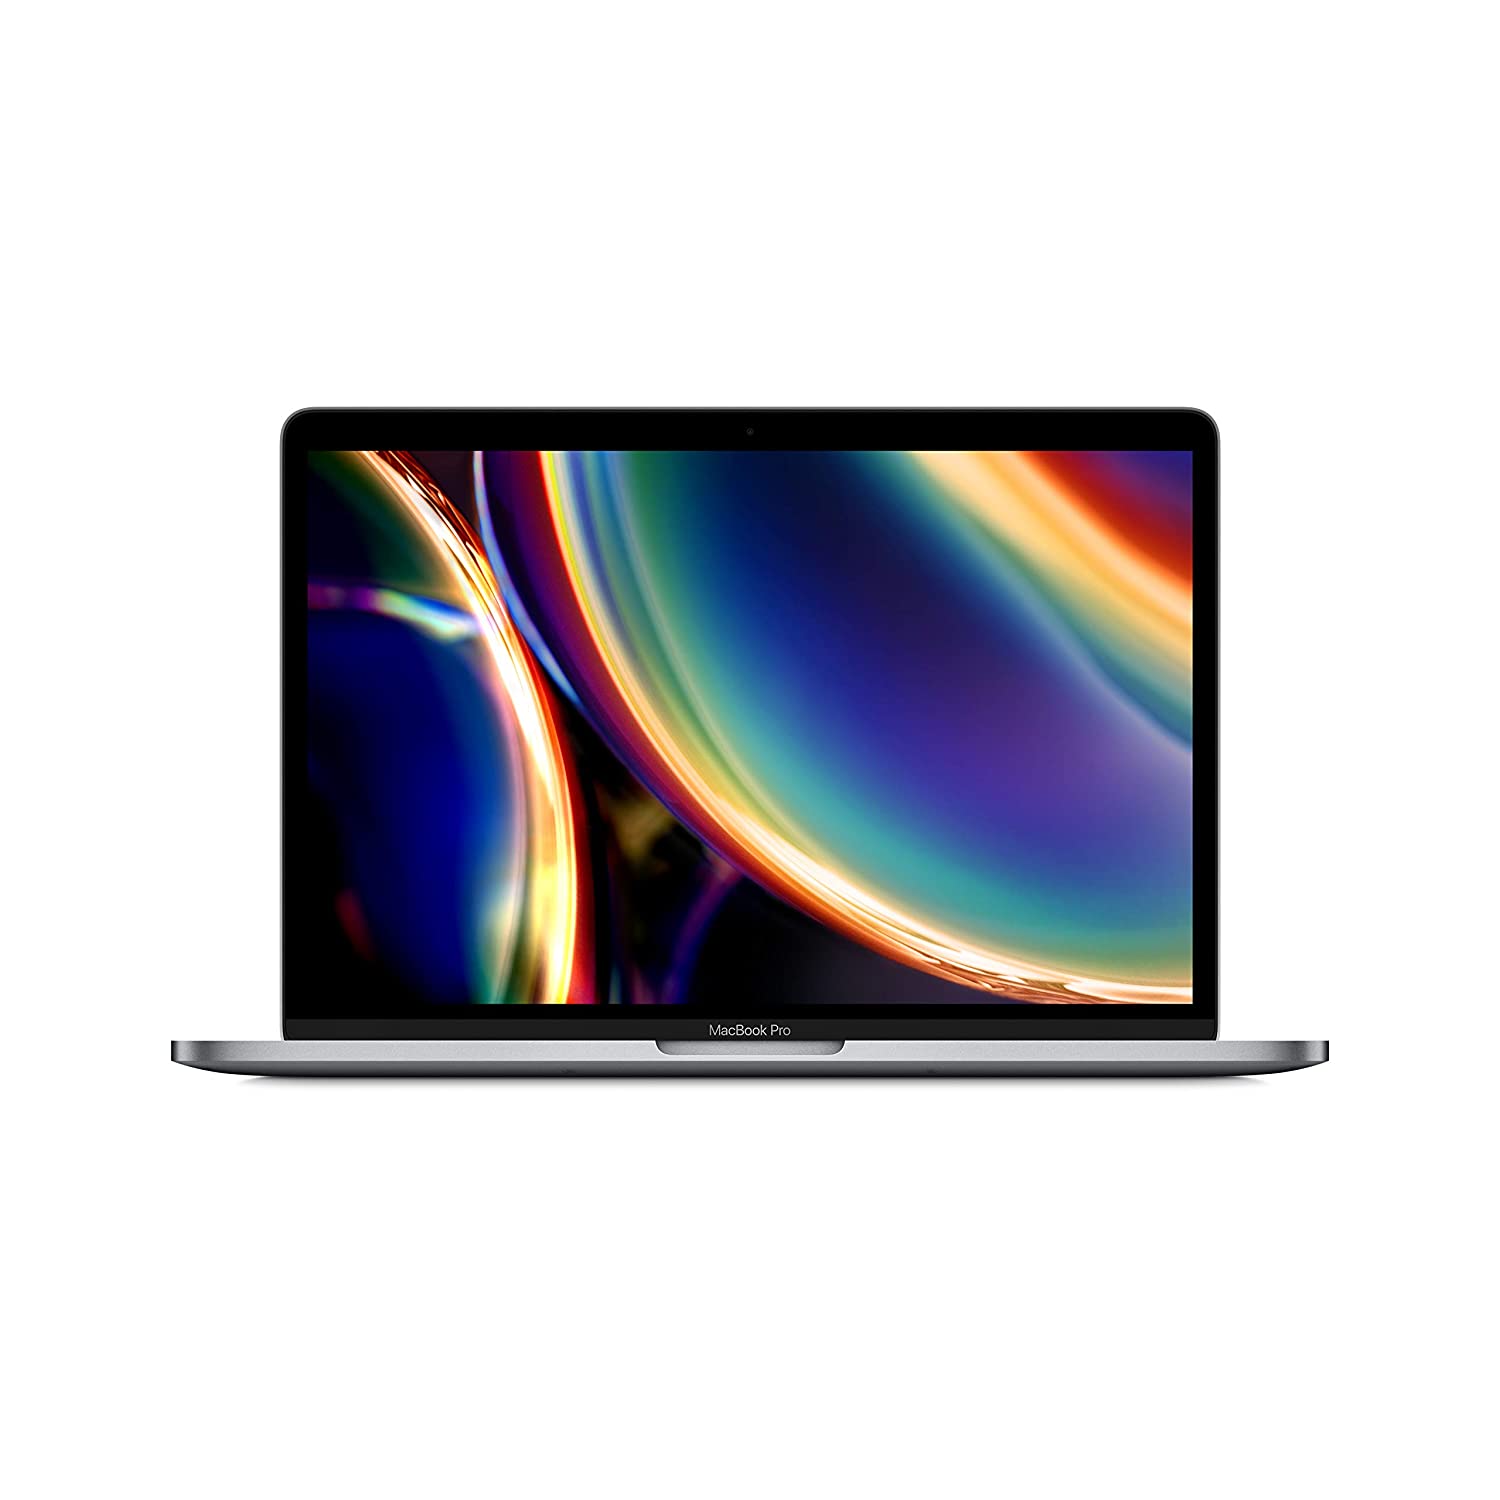 Apple MacBook Pro (13-inch, 8GB RAM, 256GB SSD, 1.4GHz Quad-core 8th-Generation Intel Core i5 Processor, Magic Keyboard) - Space Grey